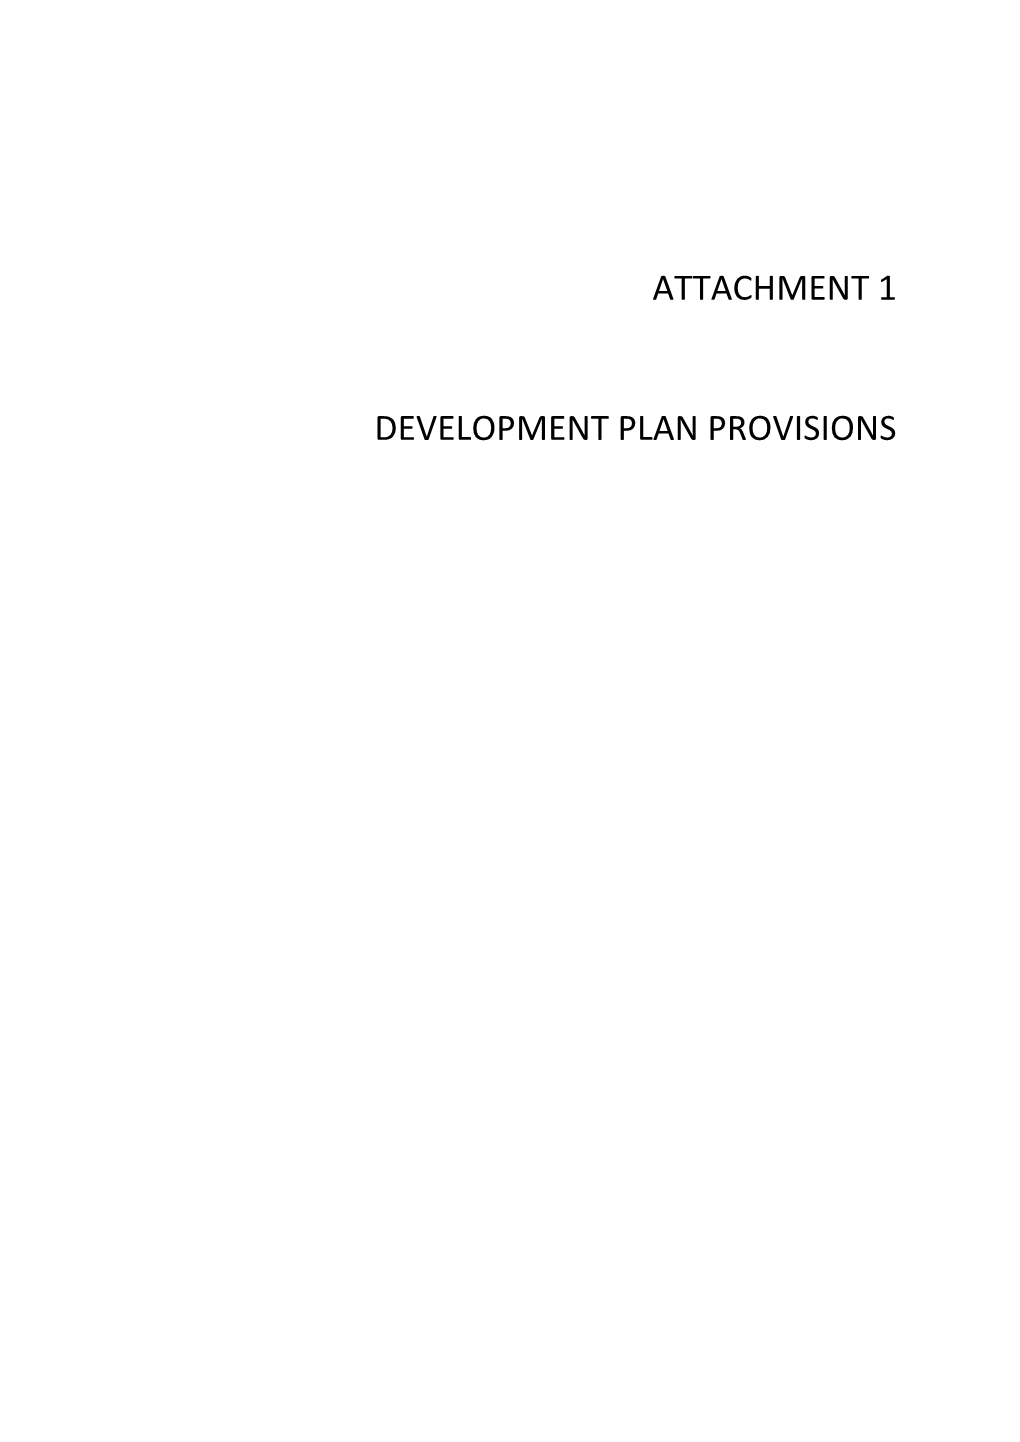 Attachment 1 Development Plan Provisions